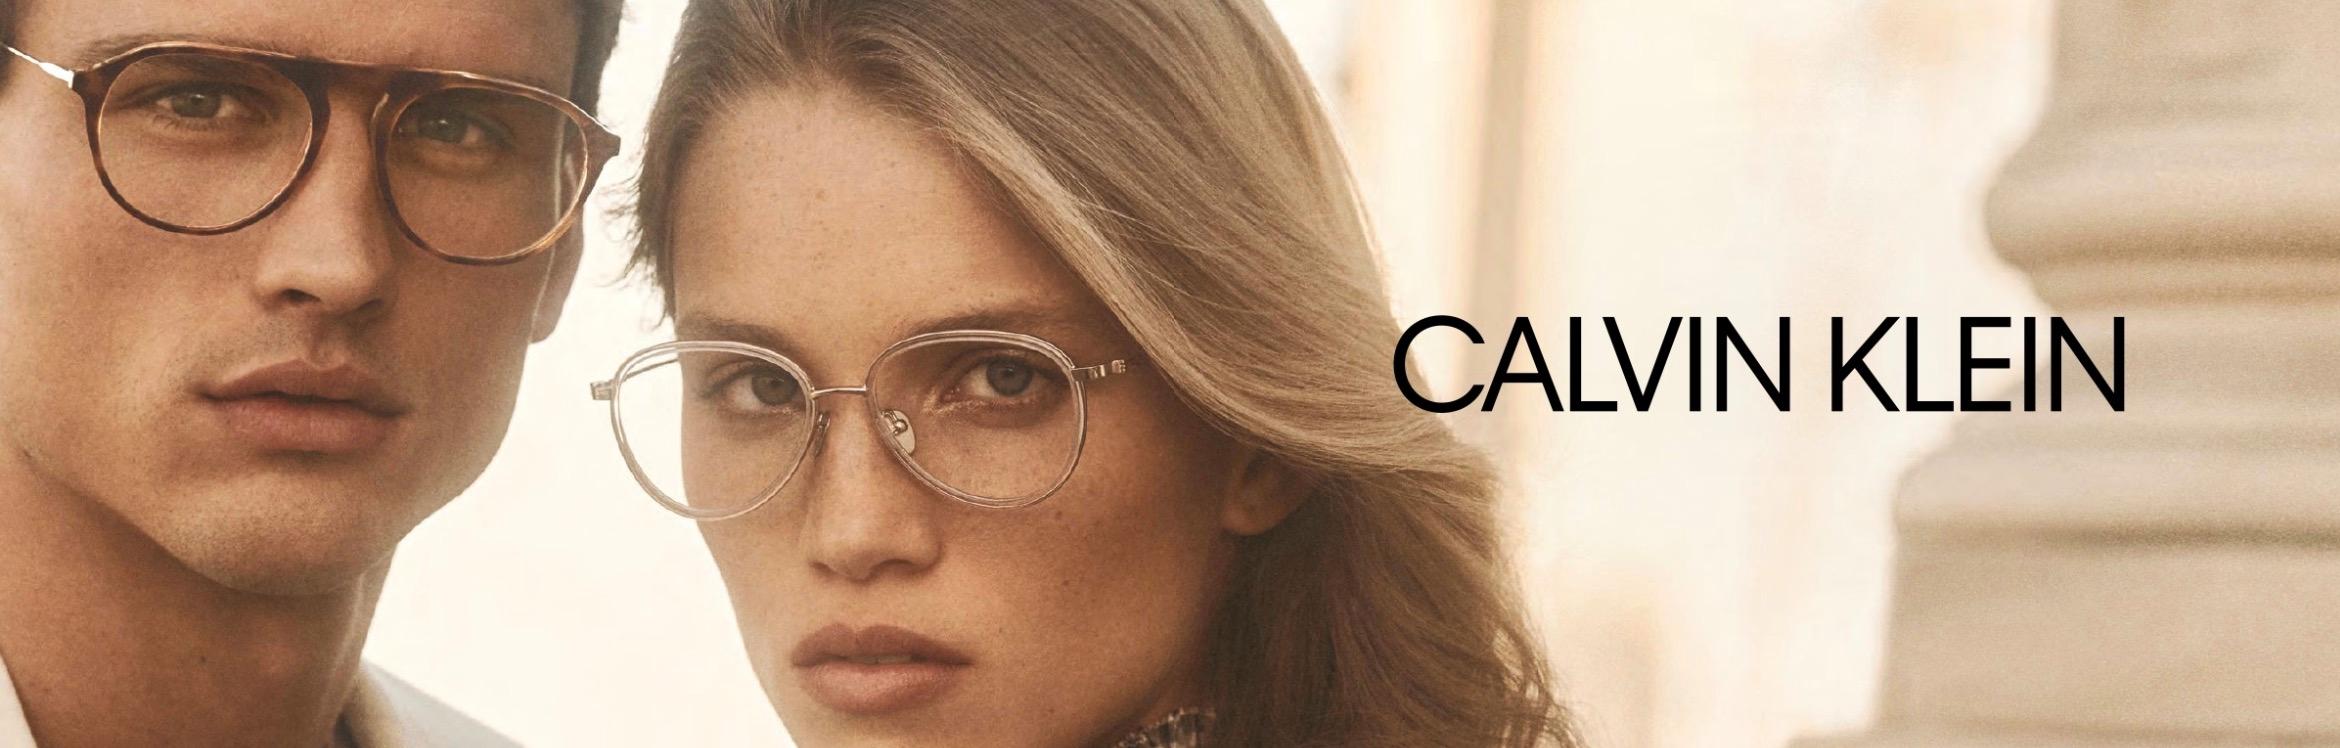 Calvin Klein Glasses | Calvin Klein Eyeglasses